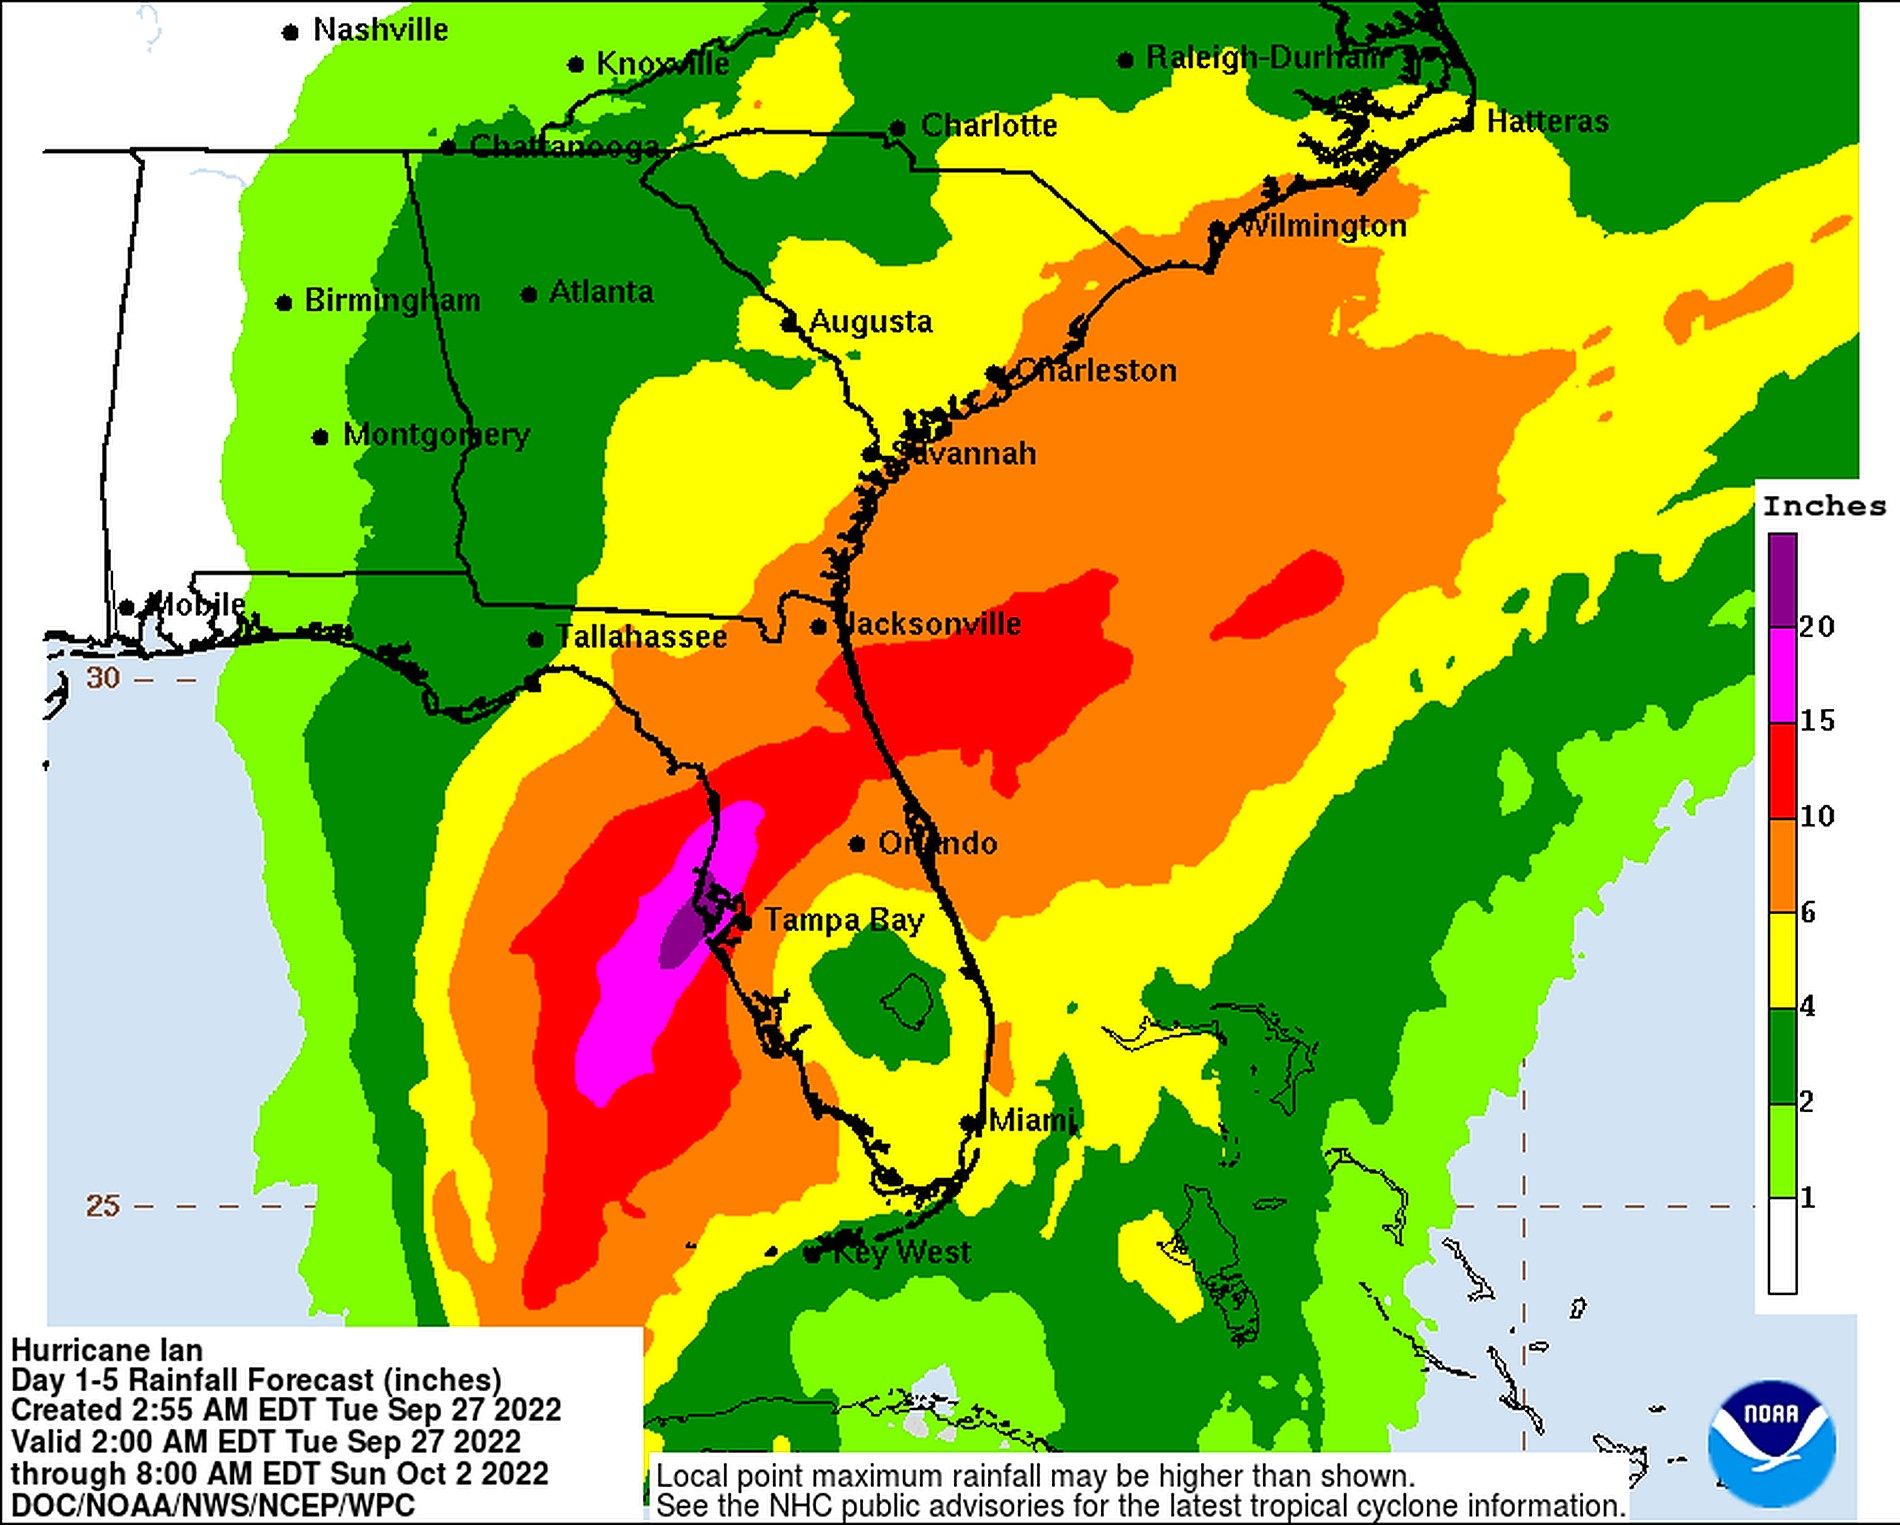 Forecast heavy rainfall for Florida due to Hurricane Ian.